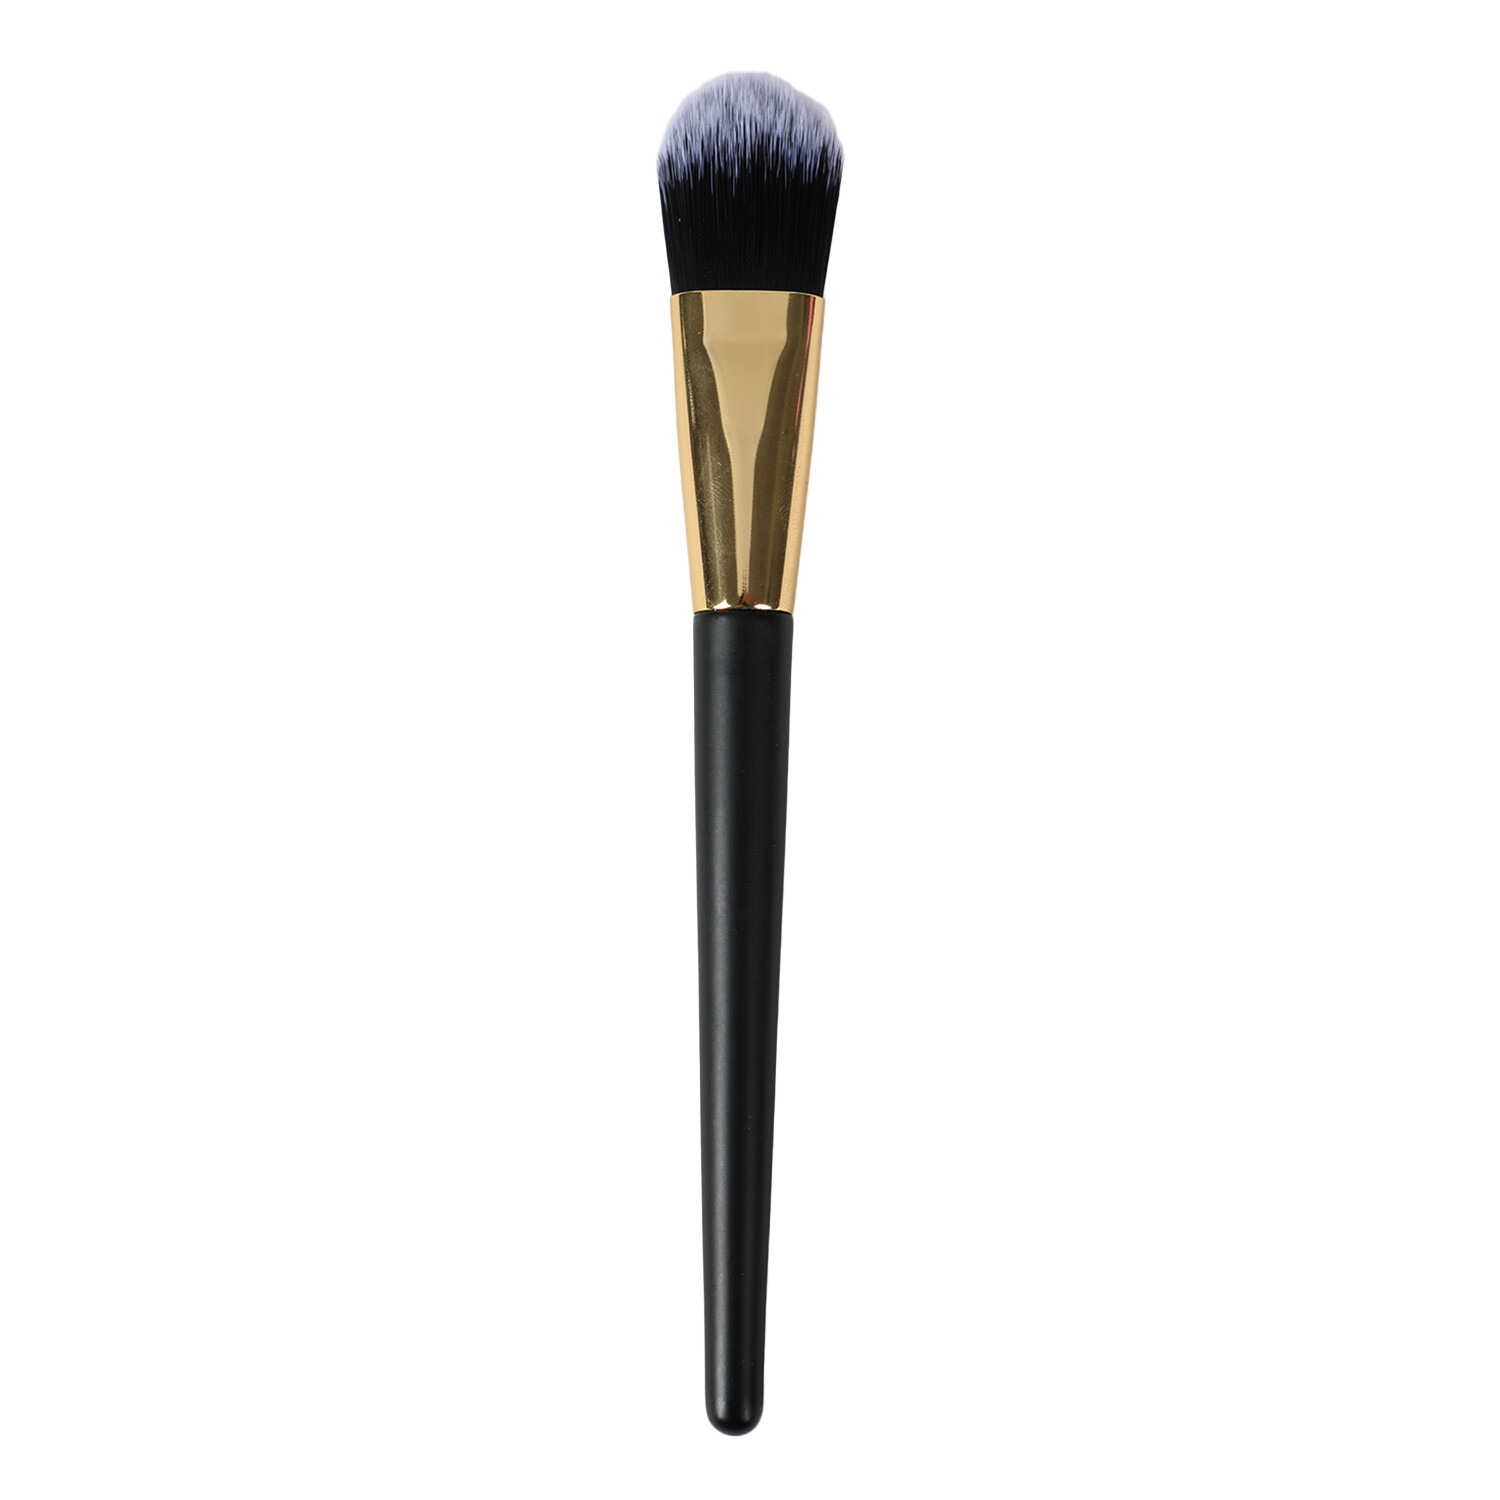 Flat Foundation Makeup Brush - Black Image 2